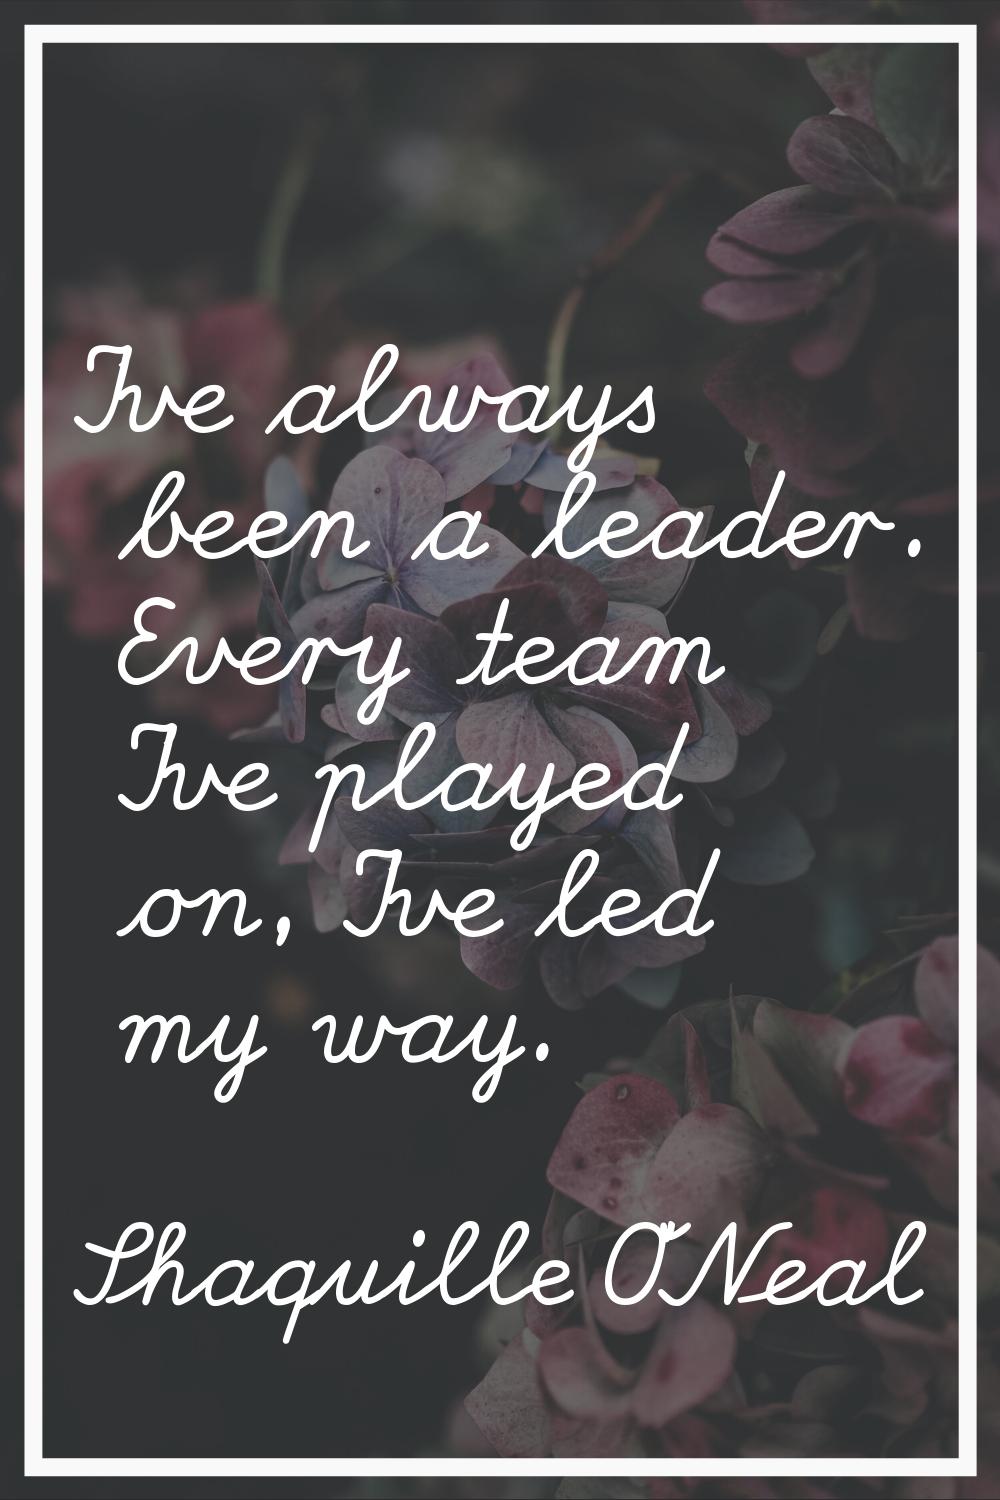 I've always been a leader. Every team I've played on, I've led my way.